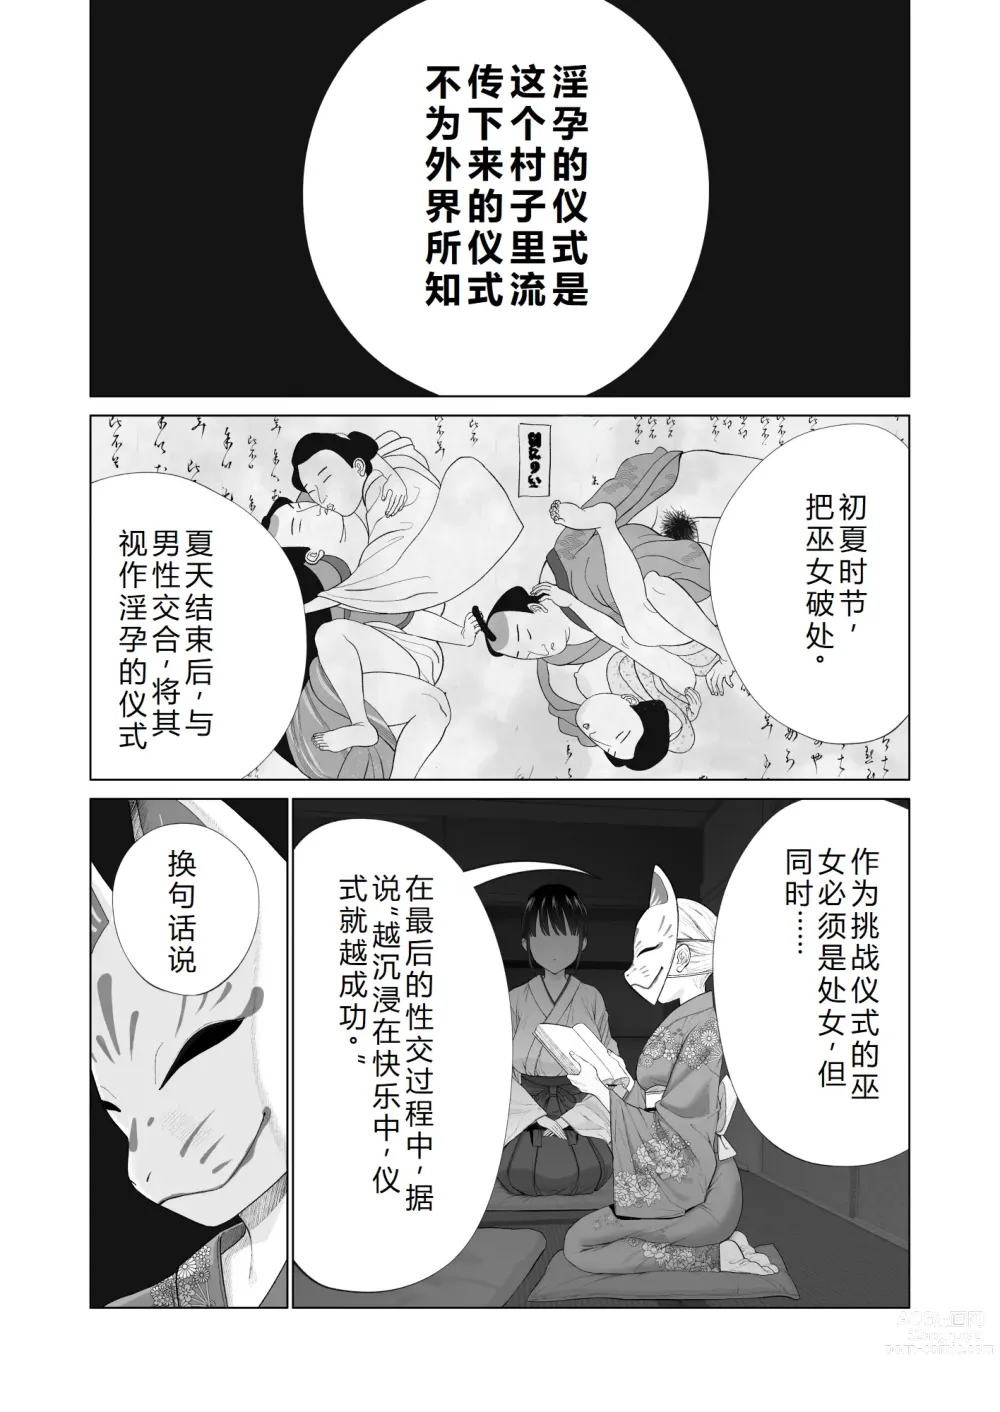 Page 3 of doujinshi 淫孕的仪式